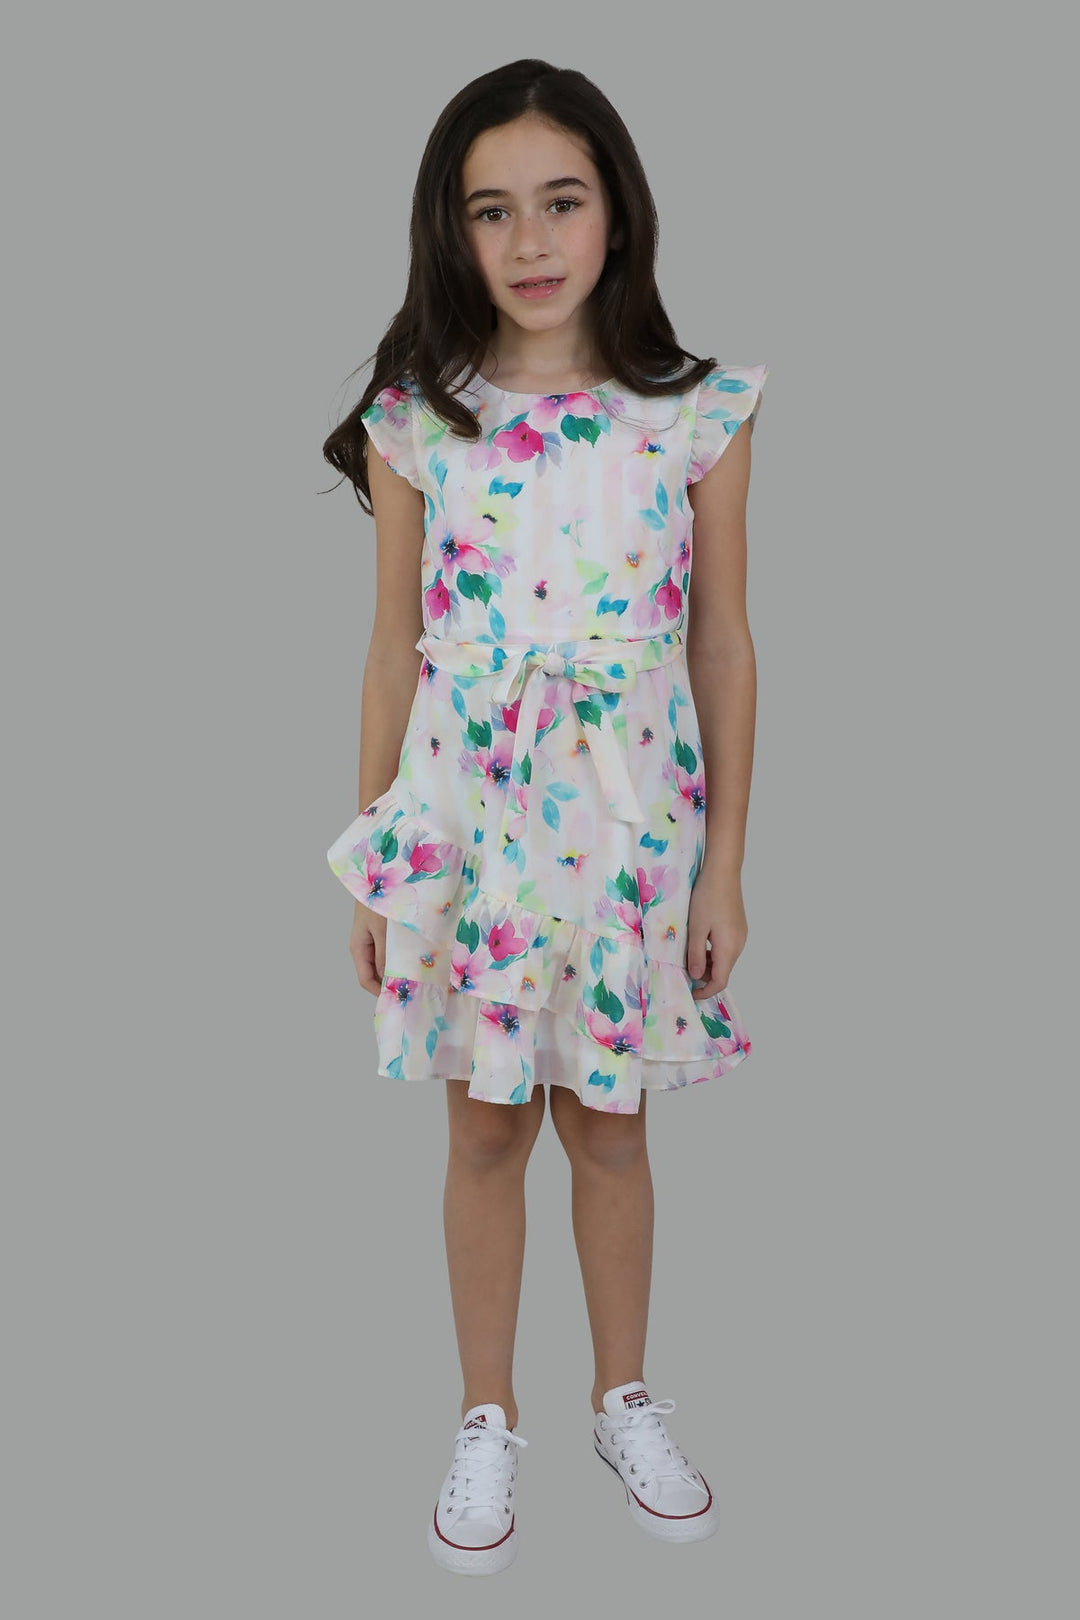 Watercolor Floral Dress